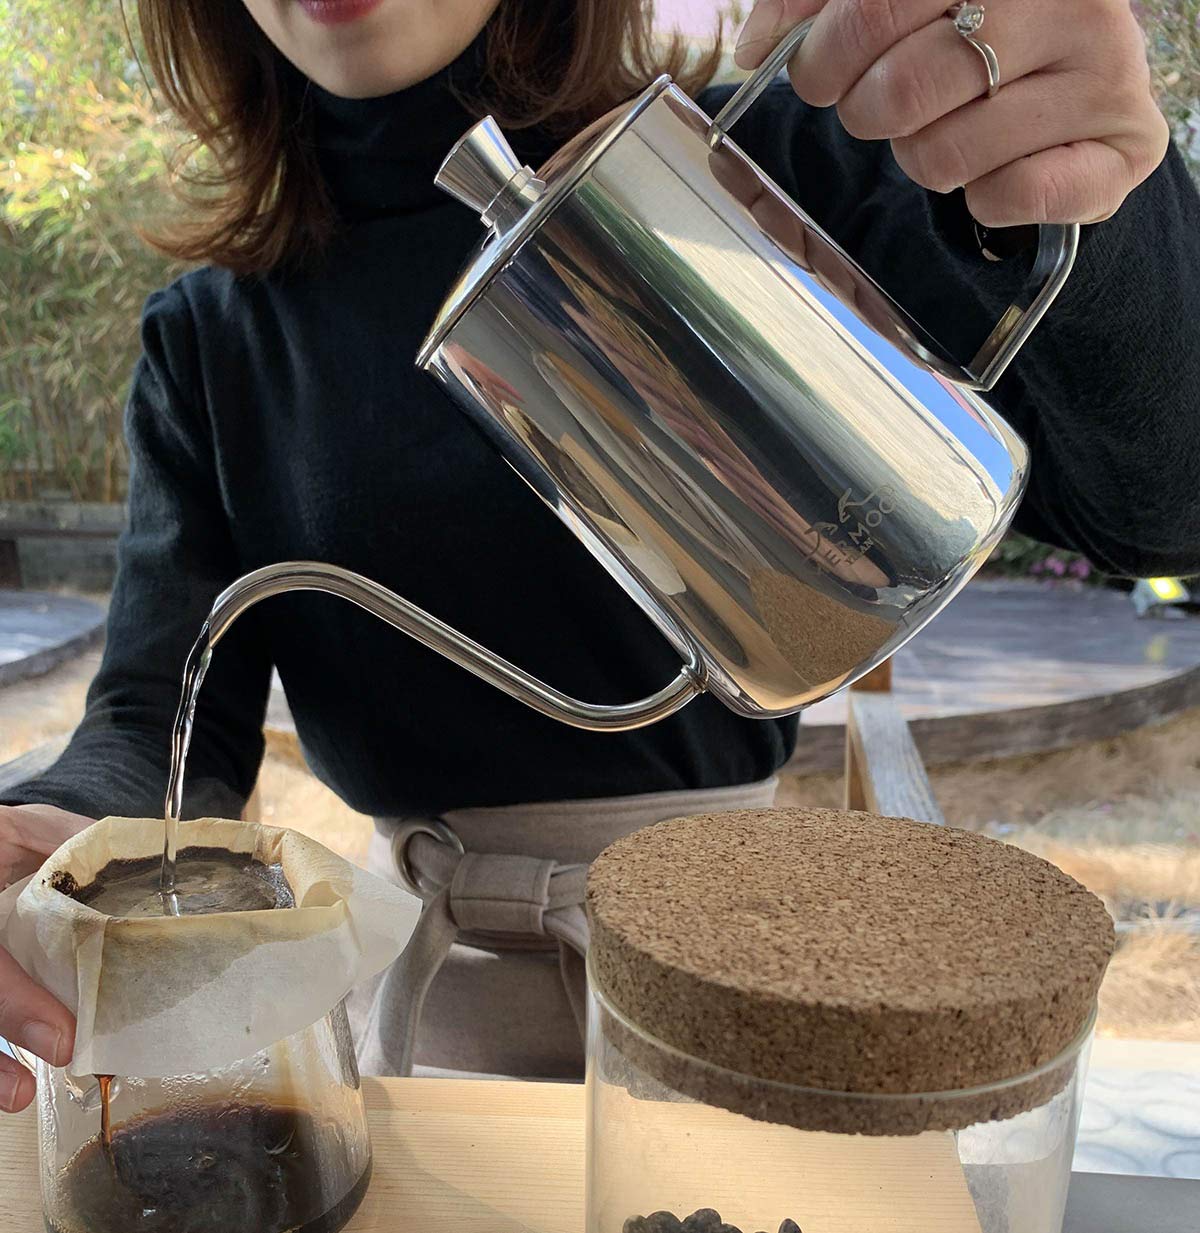 MERMOO YILAN Gooseneck Coffee Kettle 21oz Pour Over Drip Pot 600ml Long Narrow Spout Stainless Steel Water Dripper Kettle for Tea & Coffee（Black)